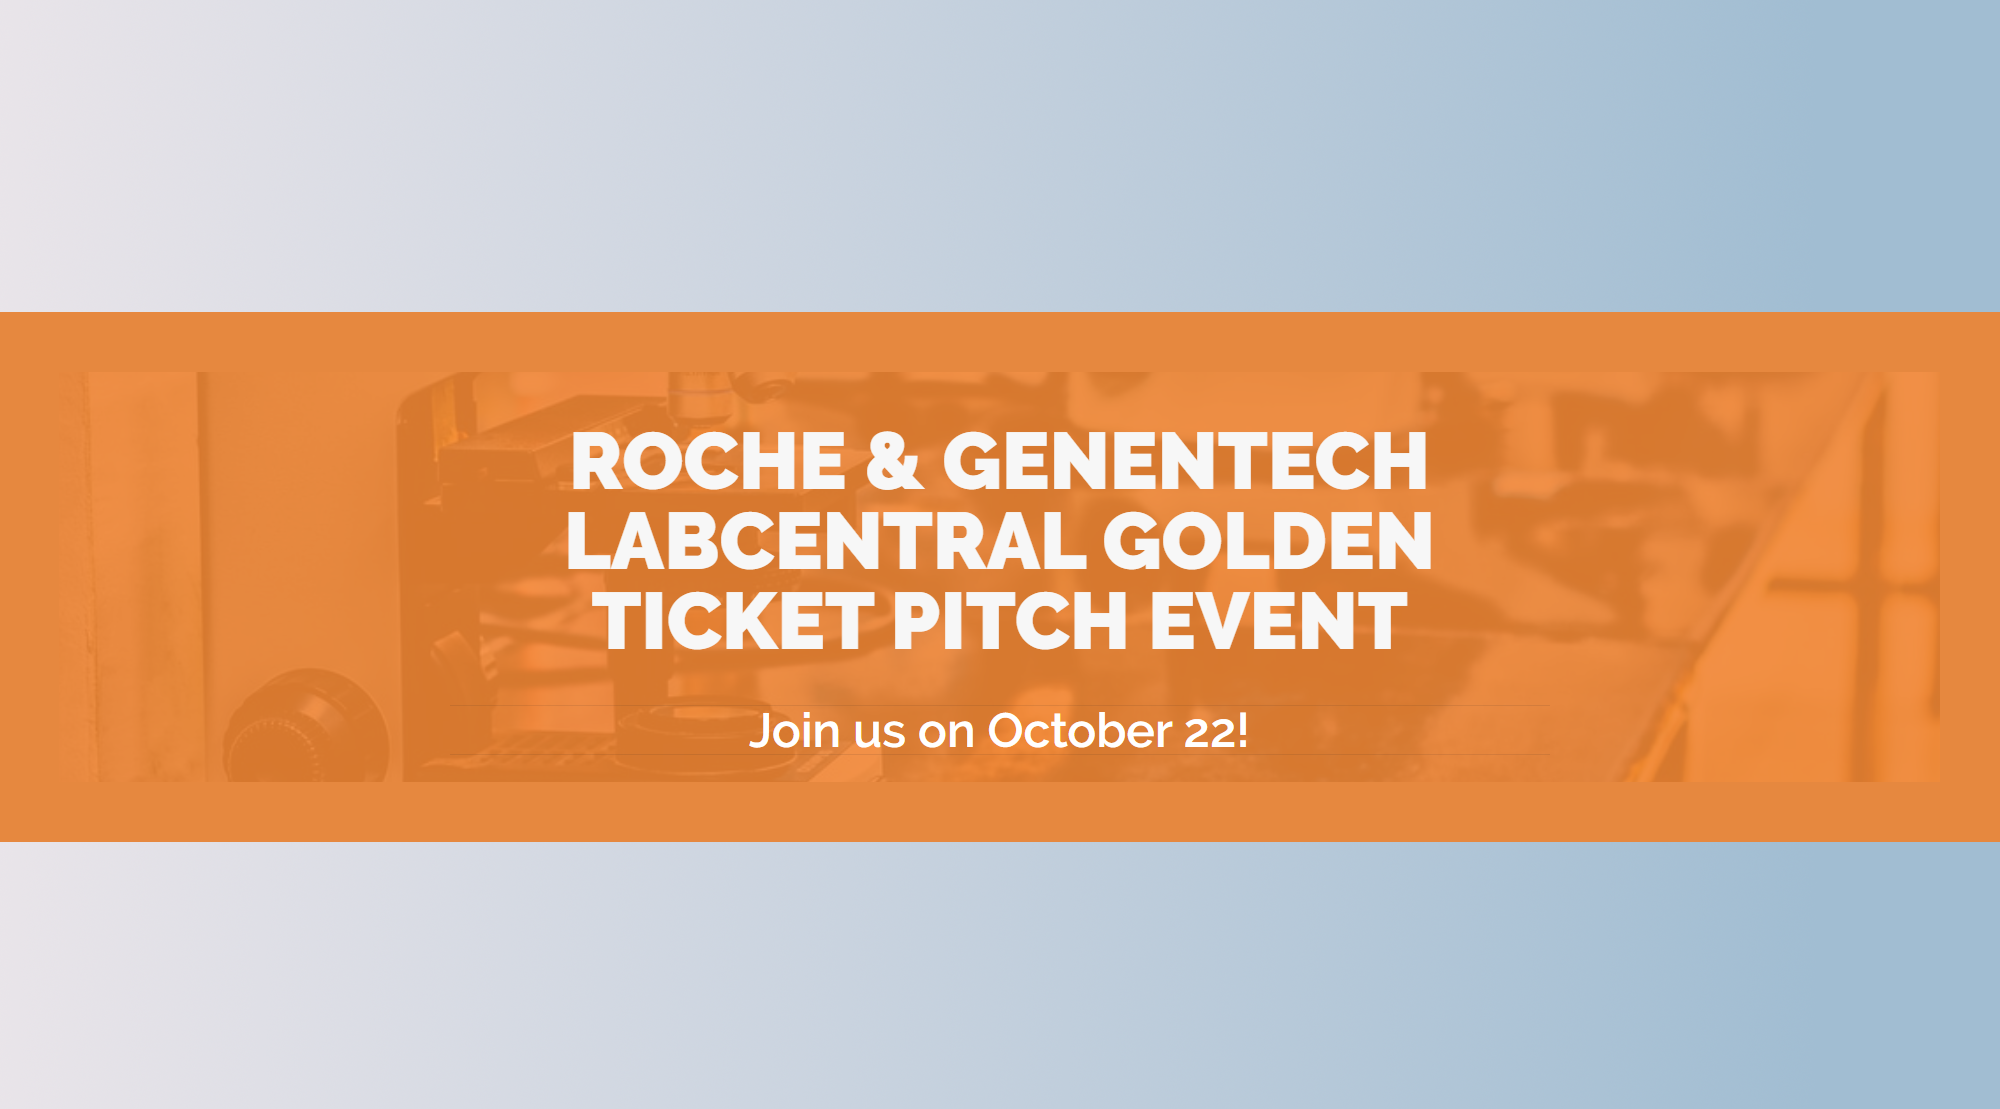 ROCHE & GENENTECH LABCENTRAL GOLDEN TICKET PITCH EVENT